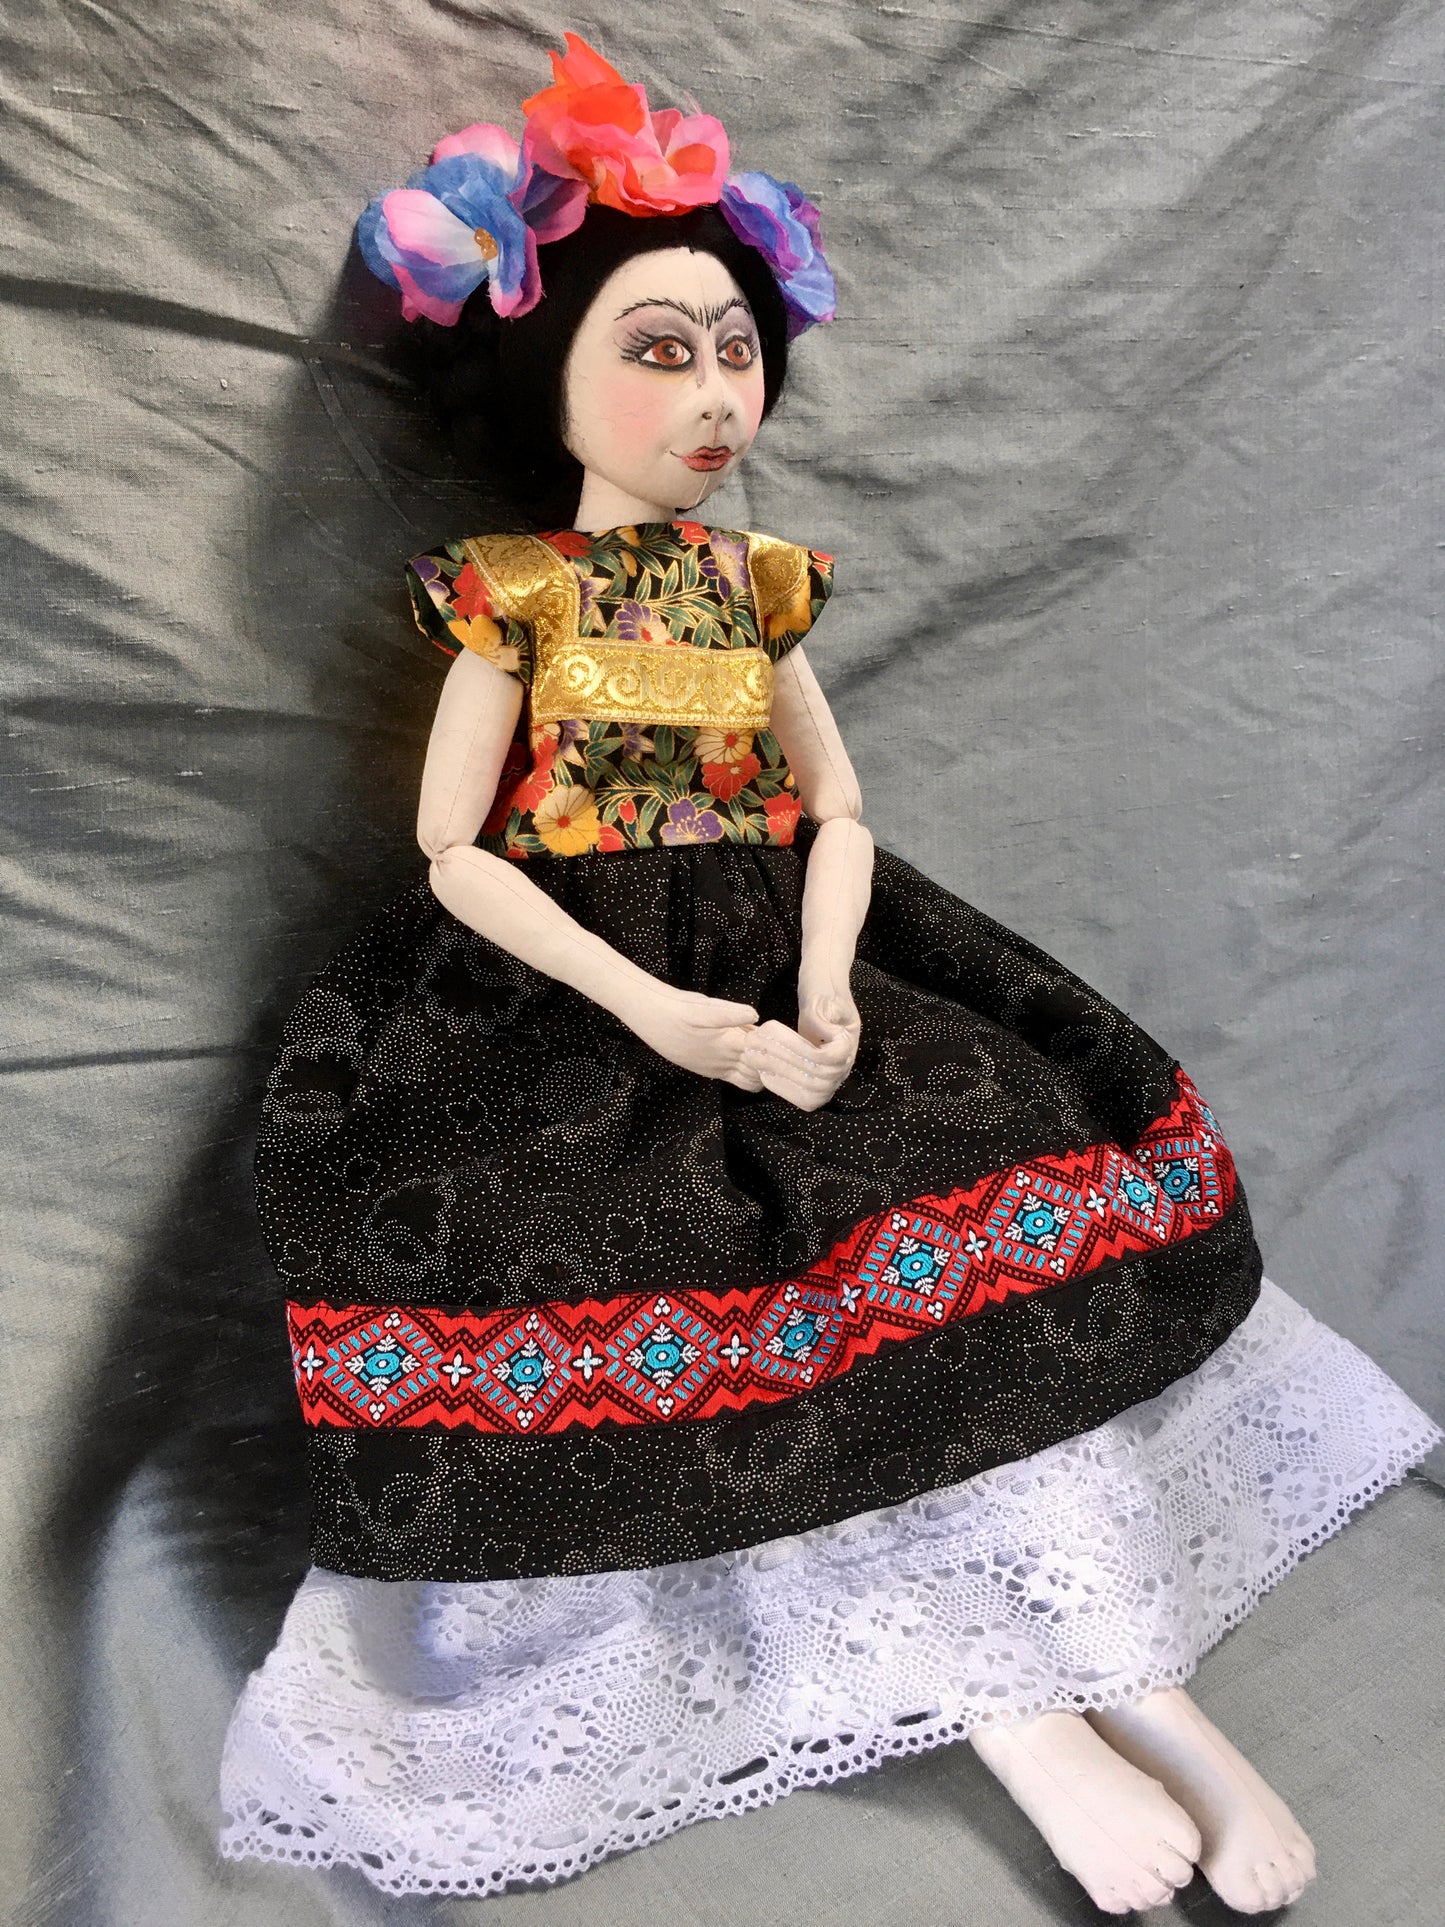 Frida Kahlo Doll made by Jan Horrox